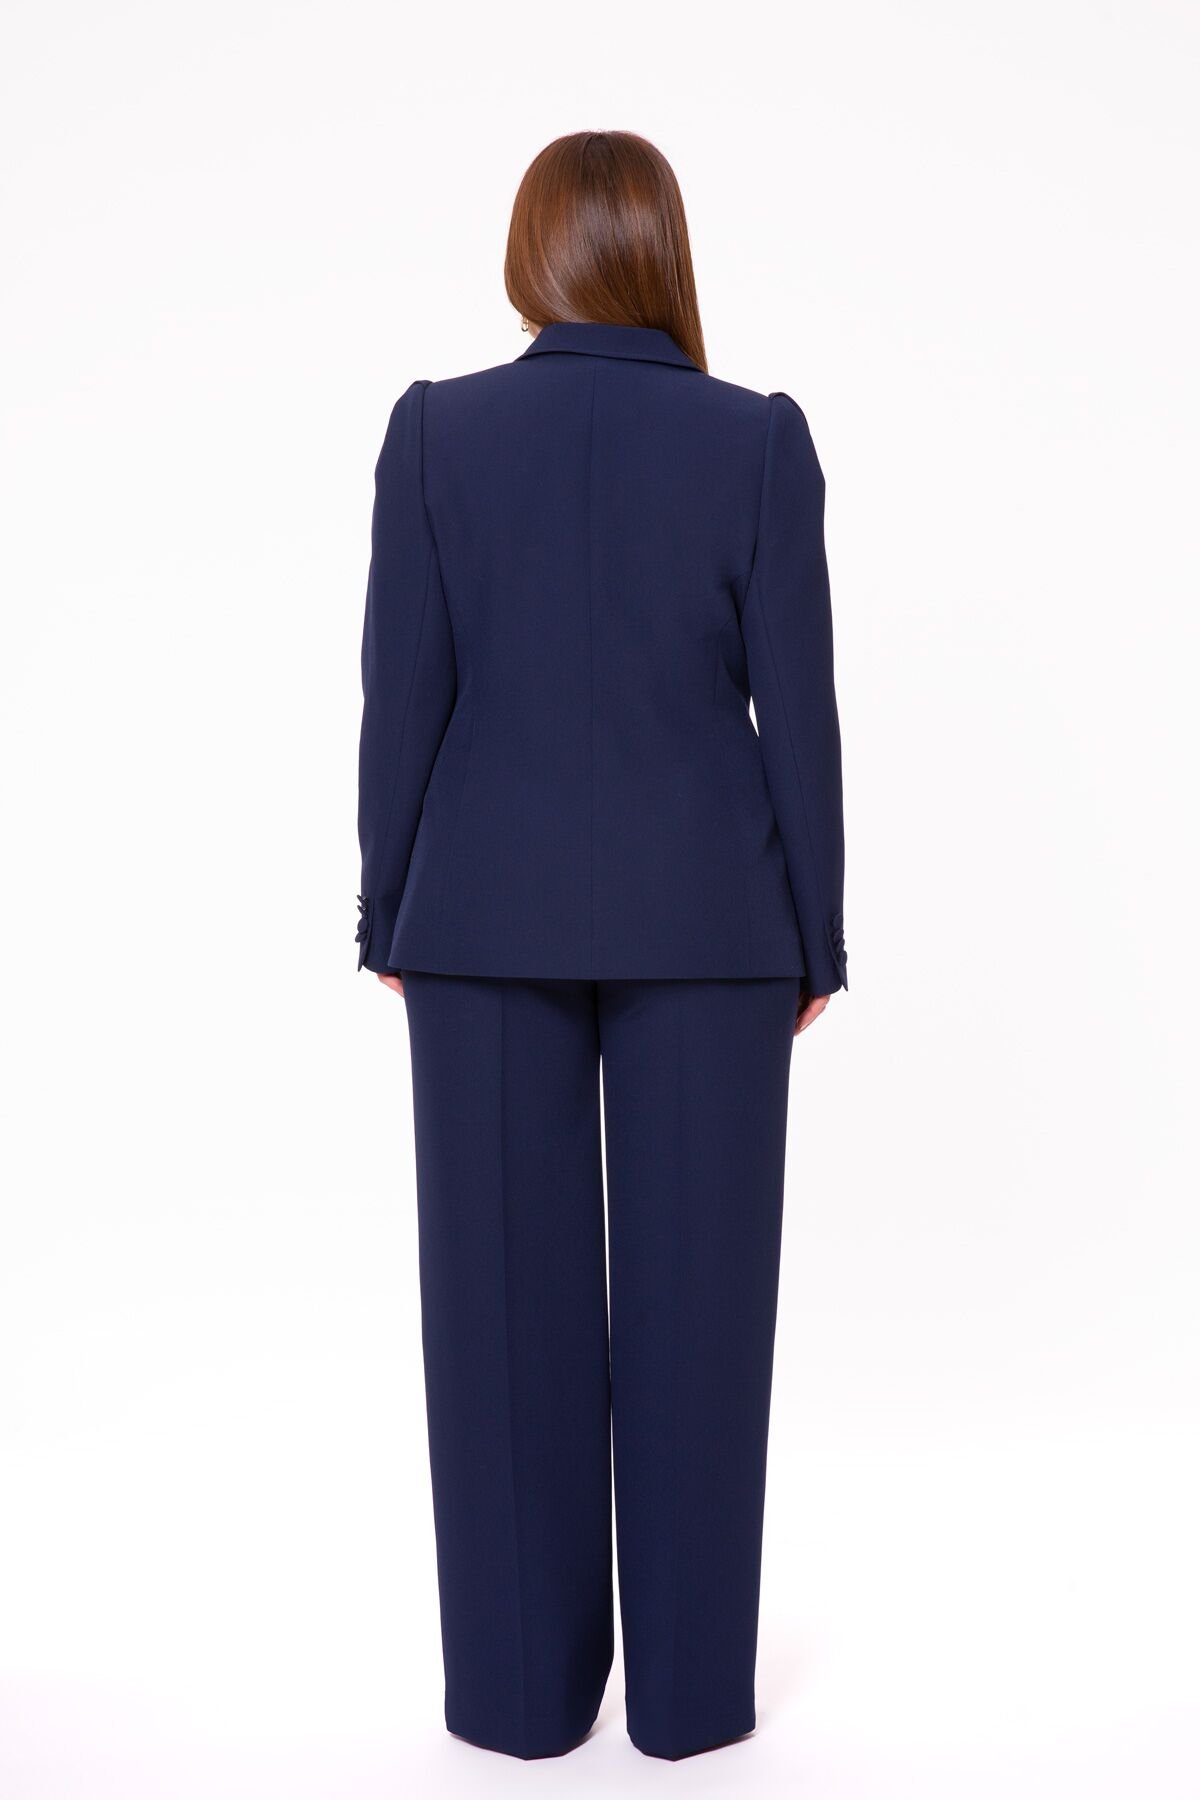 Navy Blue Women's Suit